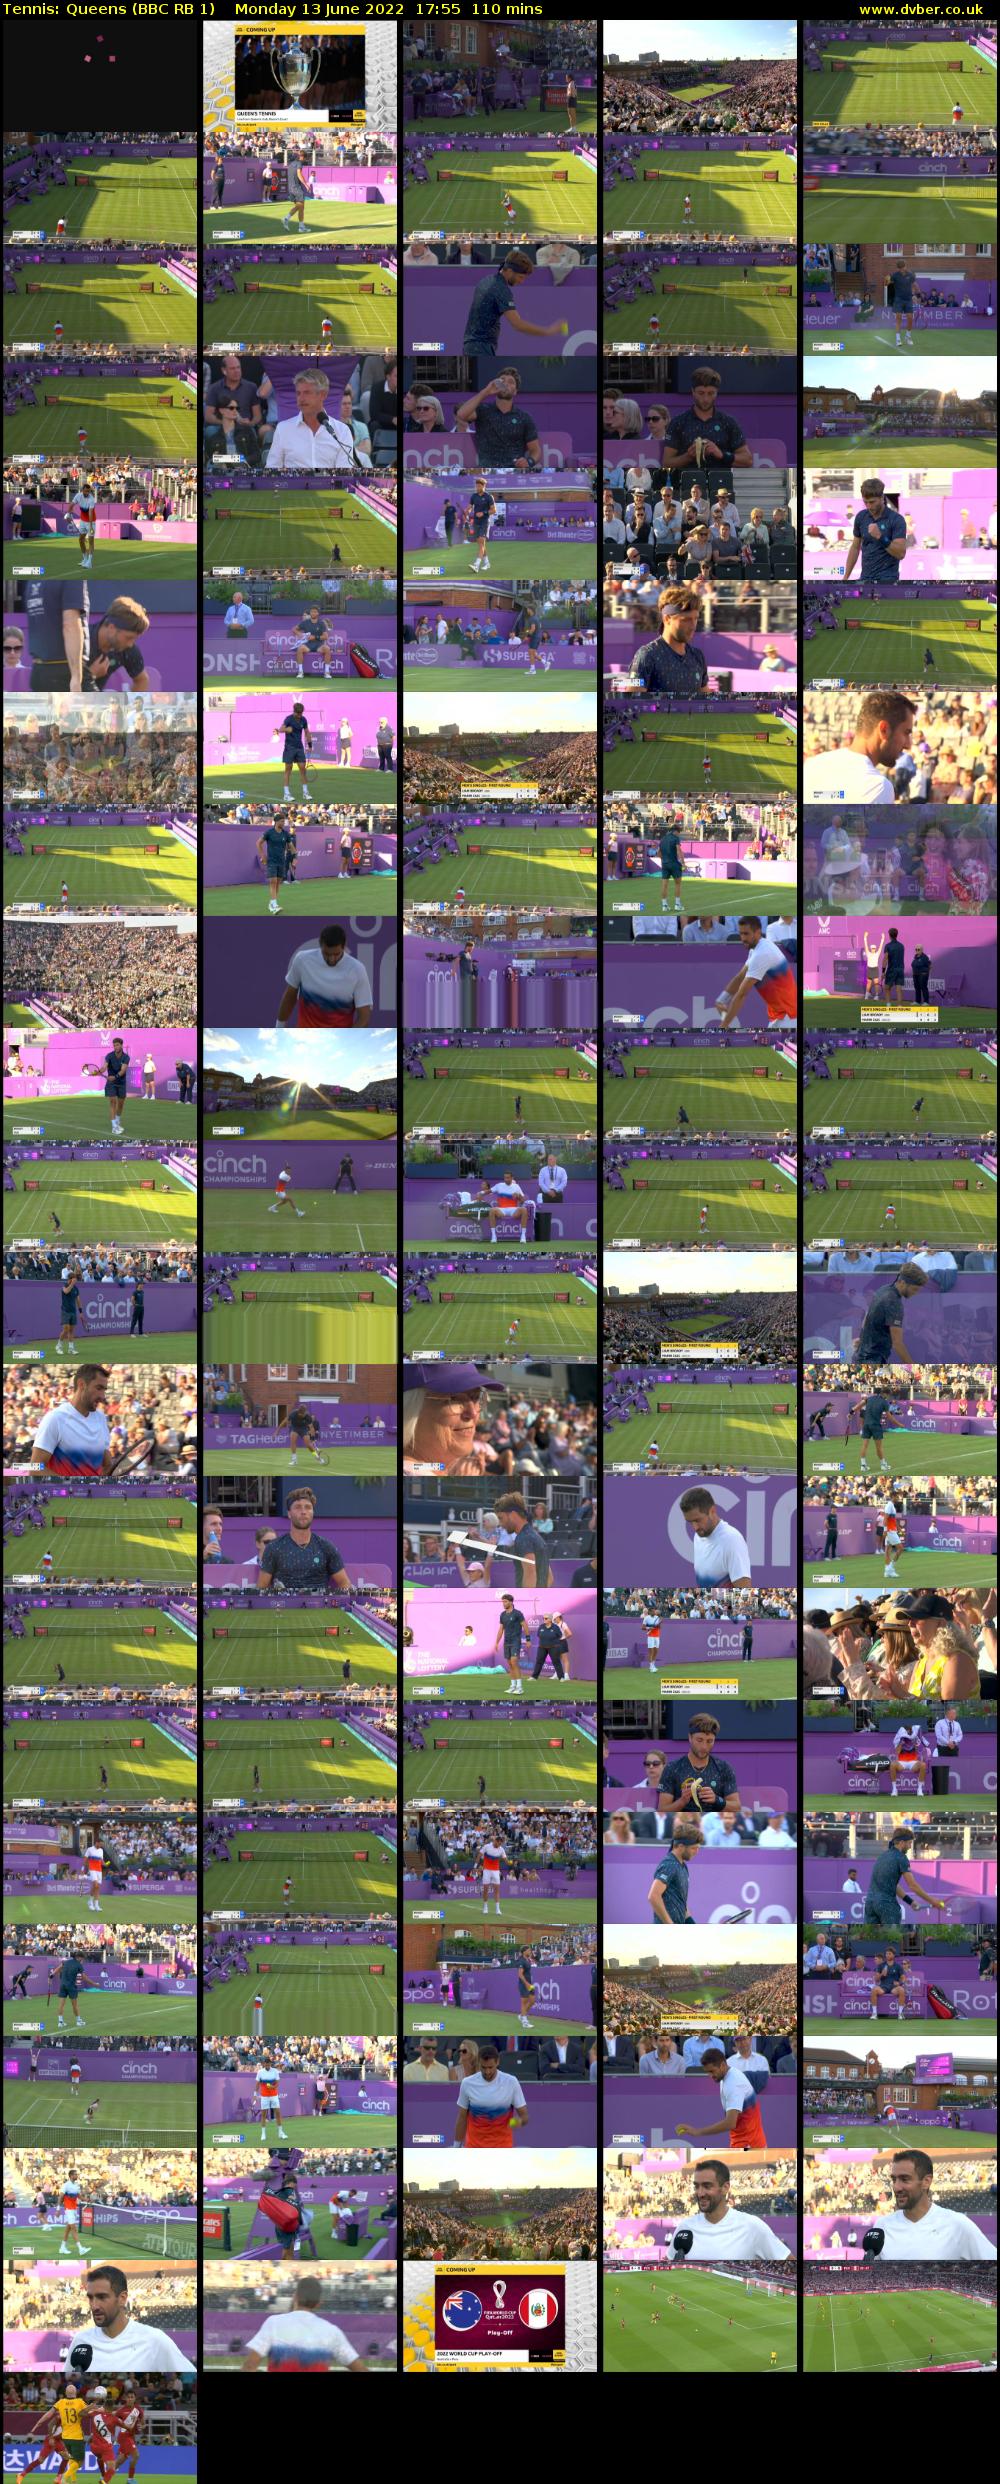 Tennis: Queens (BBC RB 1) Monday 13 June 2022 17:55 - 19:45